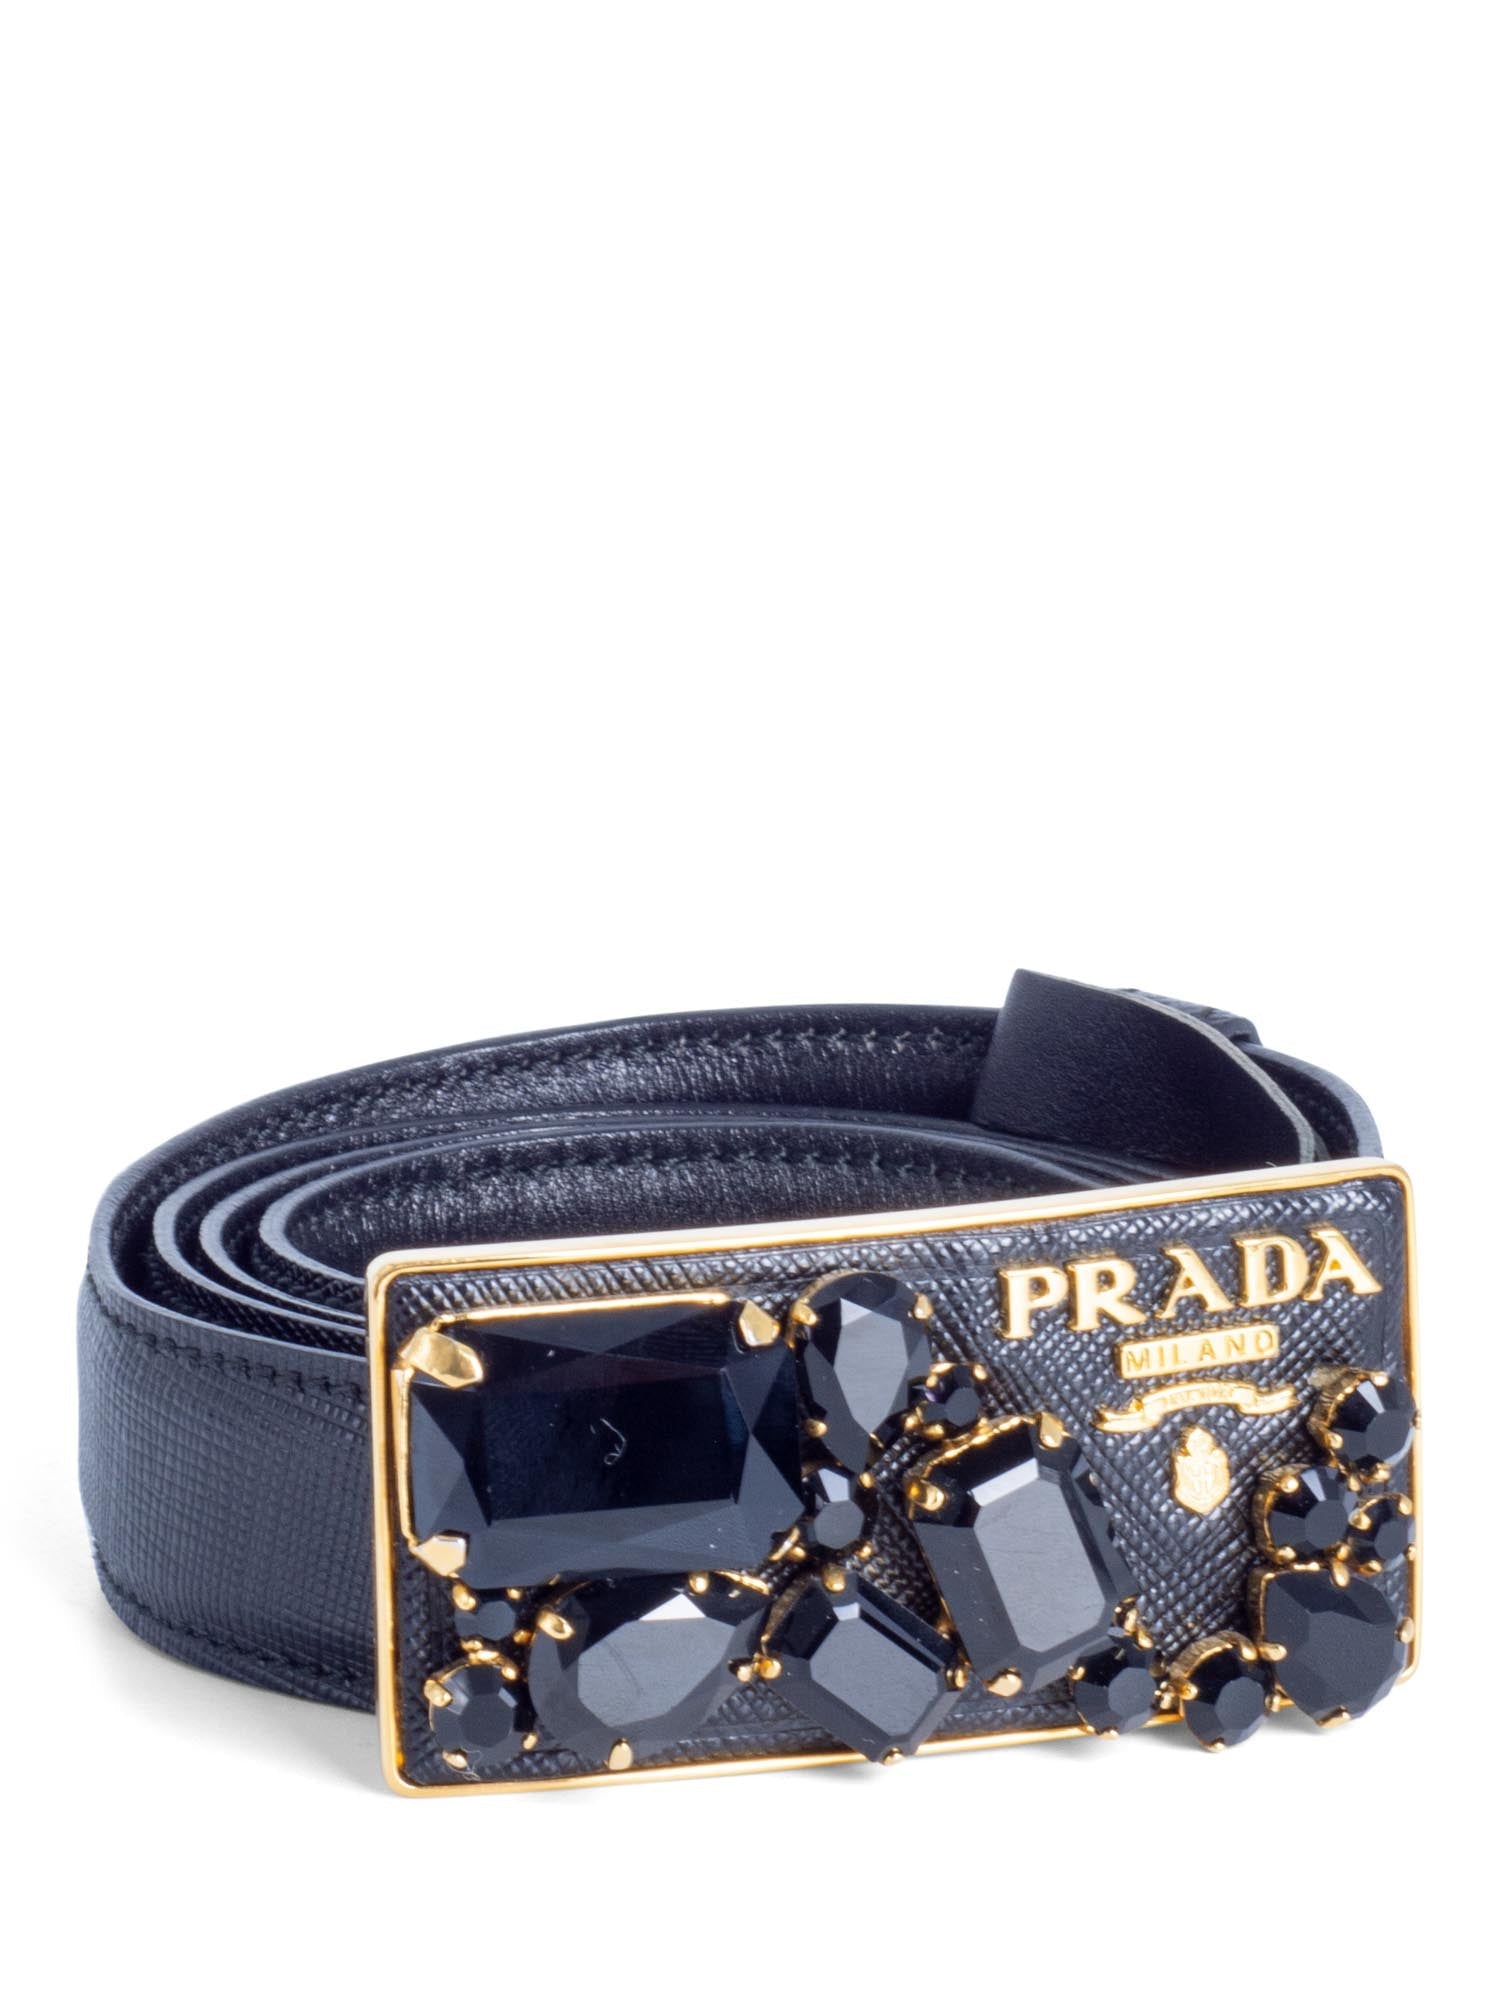 Prada Logo Saffiano Leather Gem Stone Buckle Belt Black Gold-designer resale